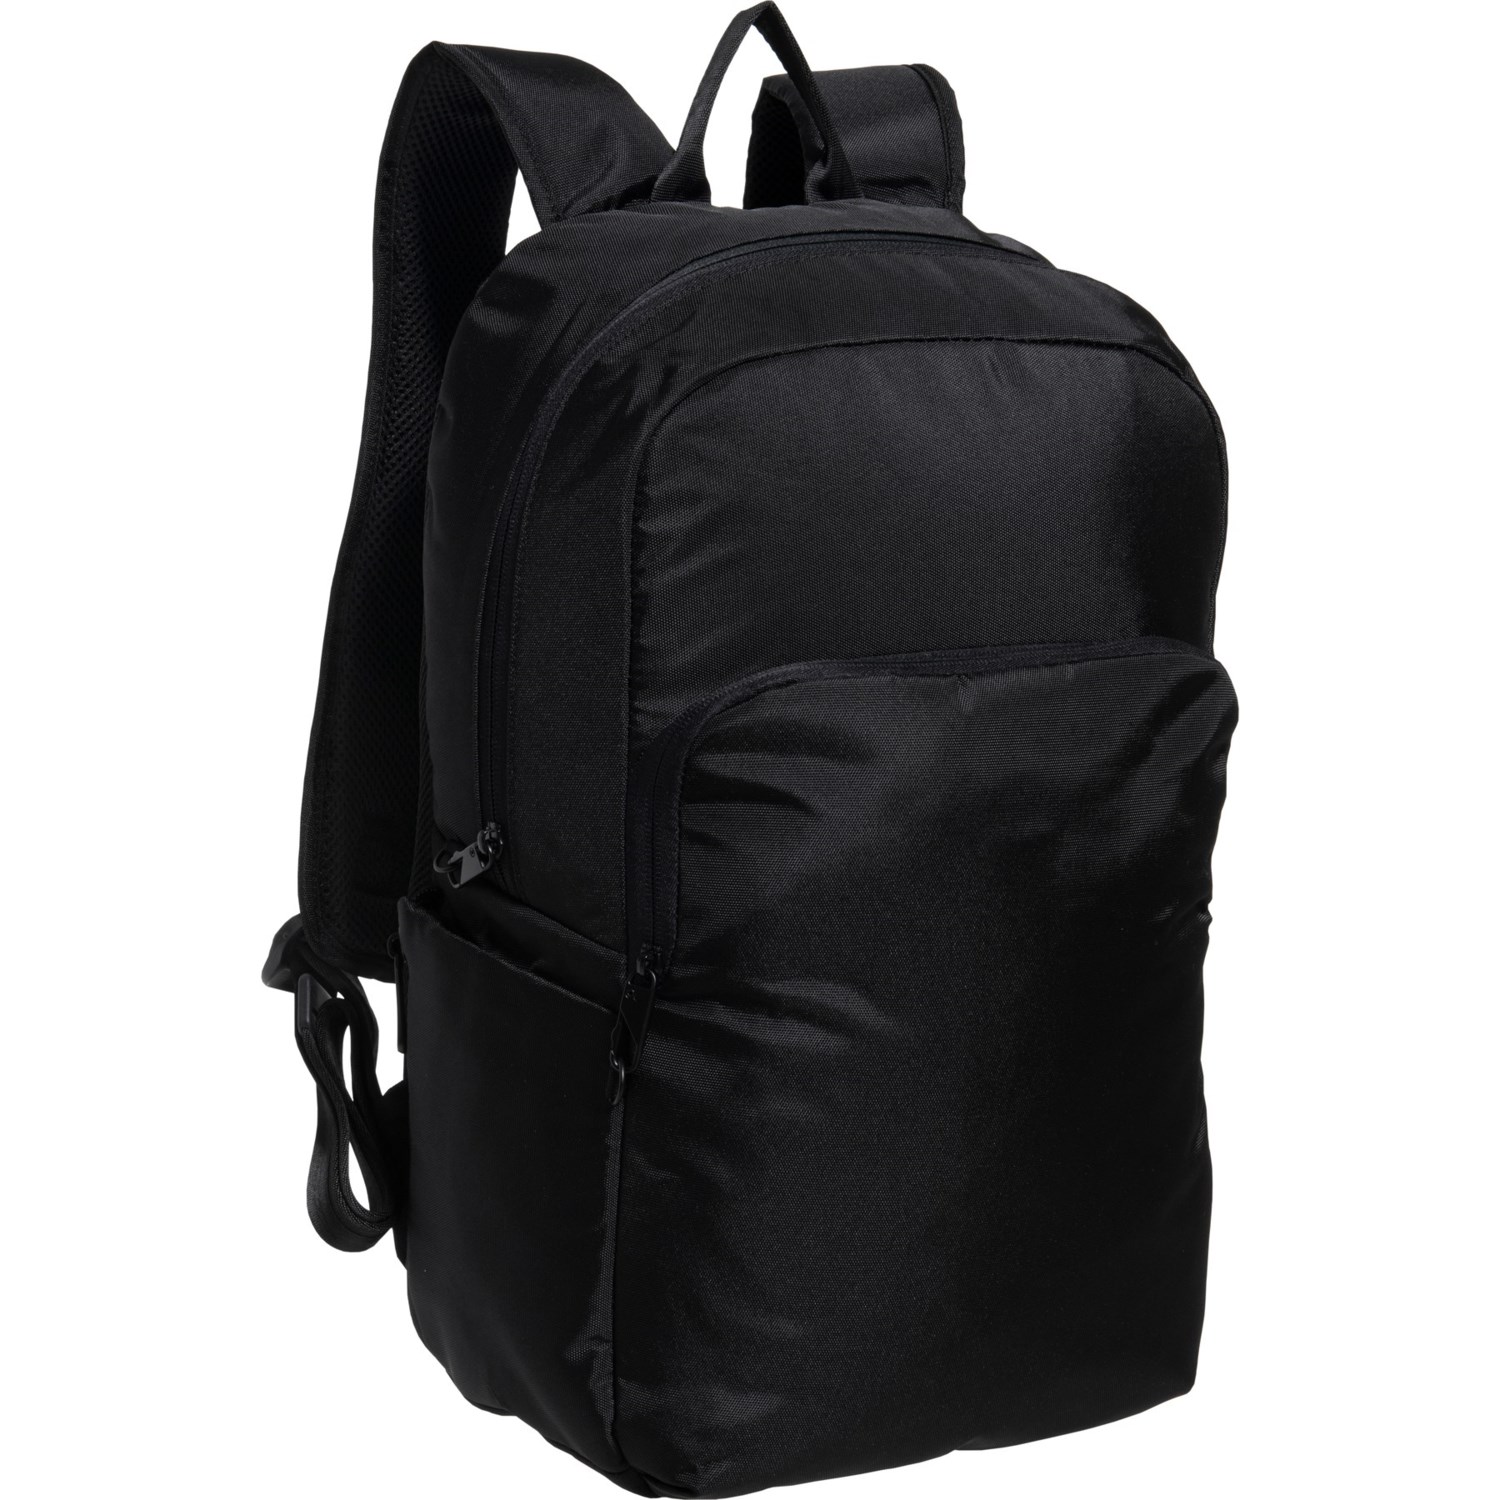 Travelon Anti-Theft Large Backpack - Black - Save 51%